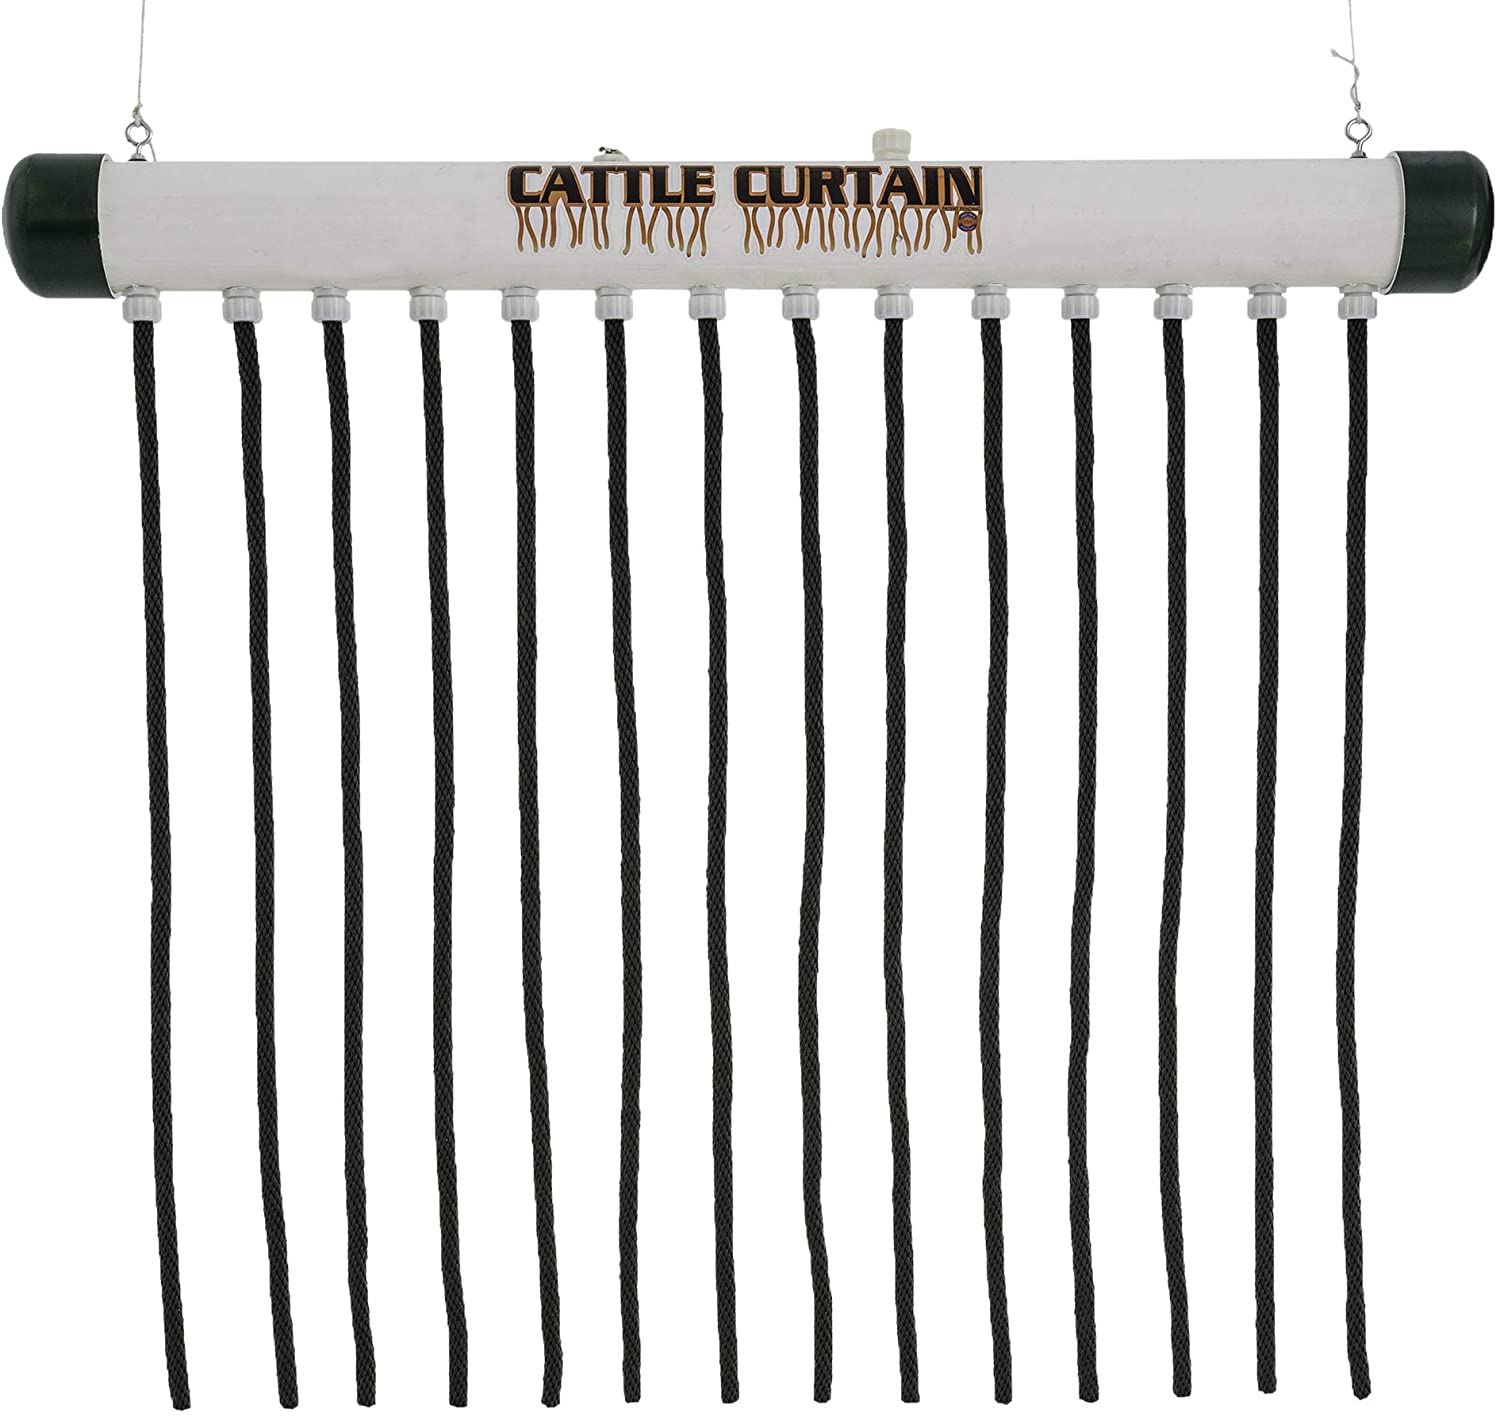 Cattle Curtain